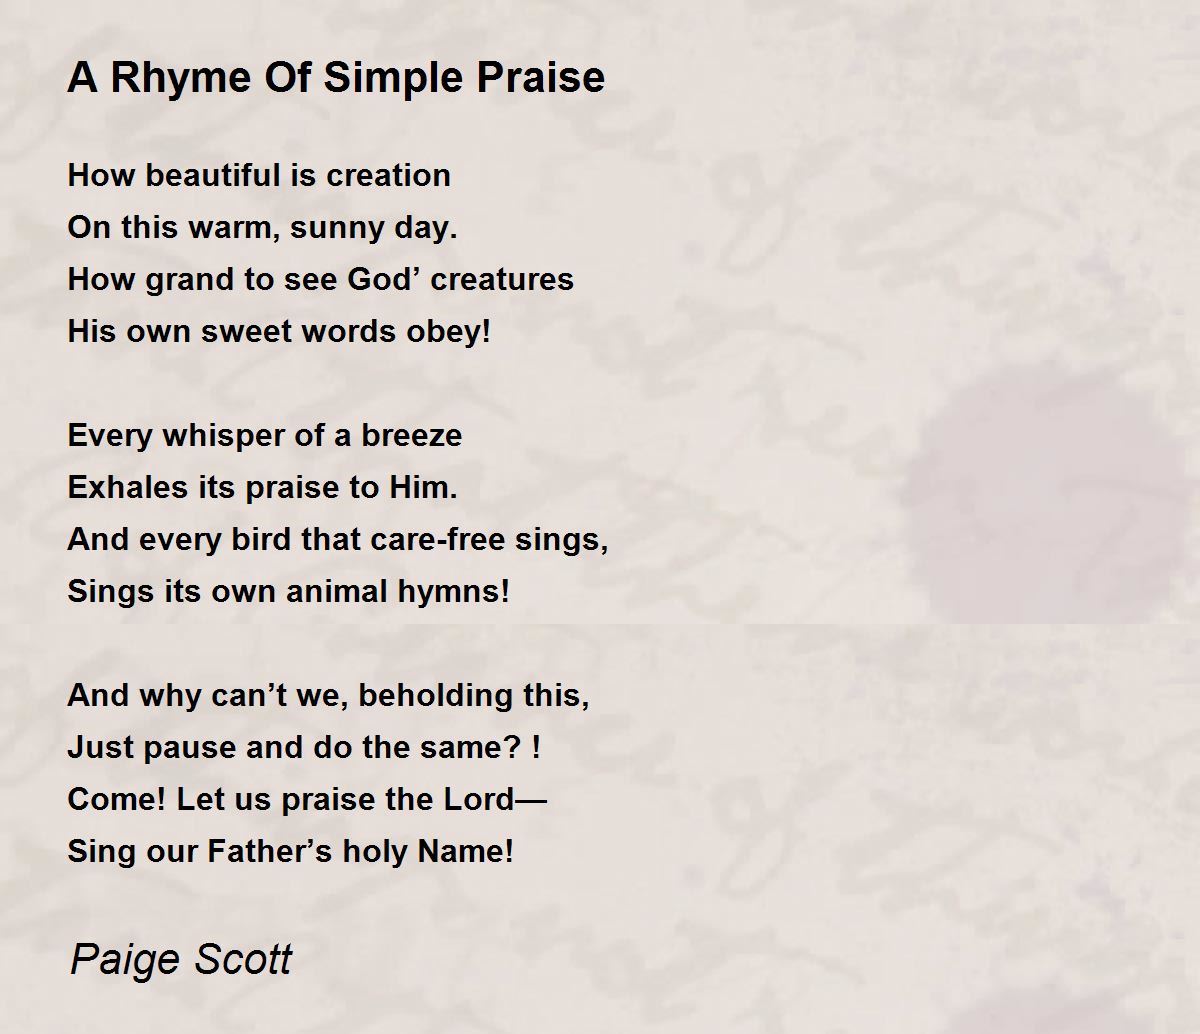 A Rhyme Of Simple Praise - A Rhyme Of Simple Praise Poem by Paige Scott